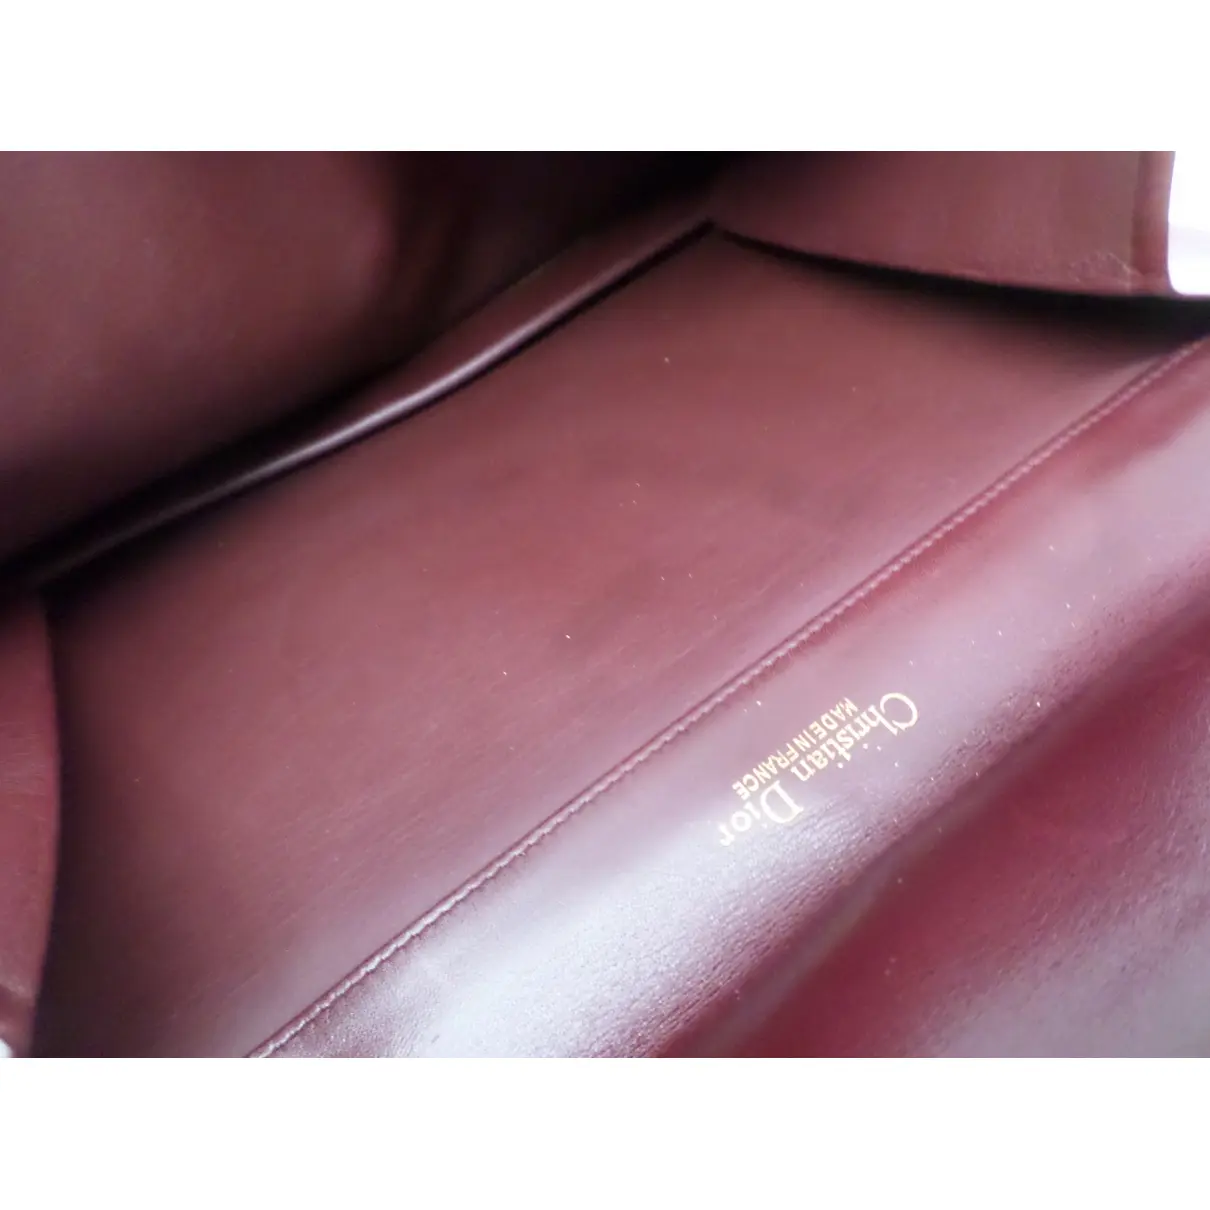 Leather handbag Dior - Vintage